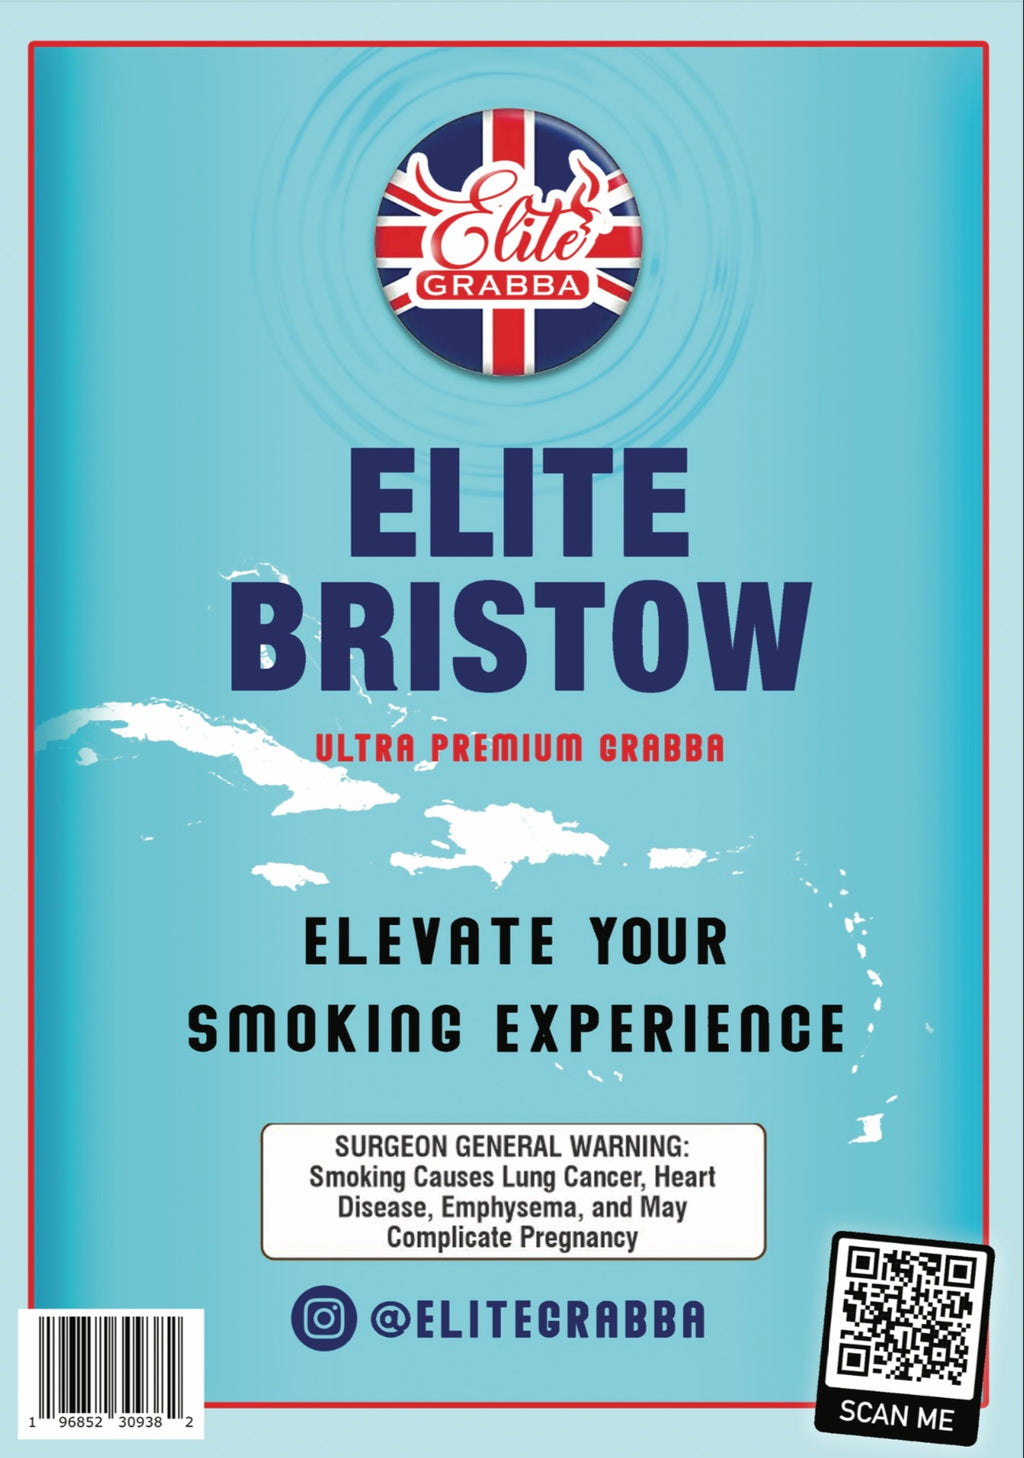 Elite Bristow